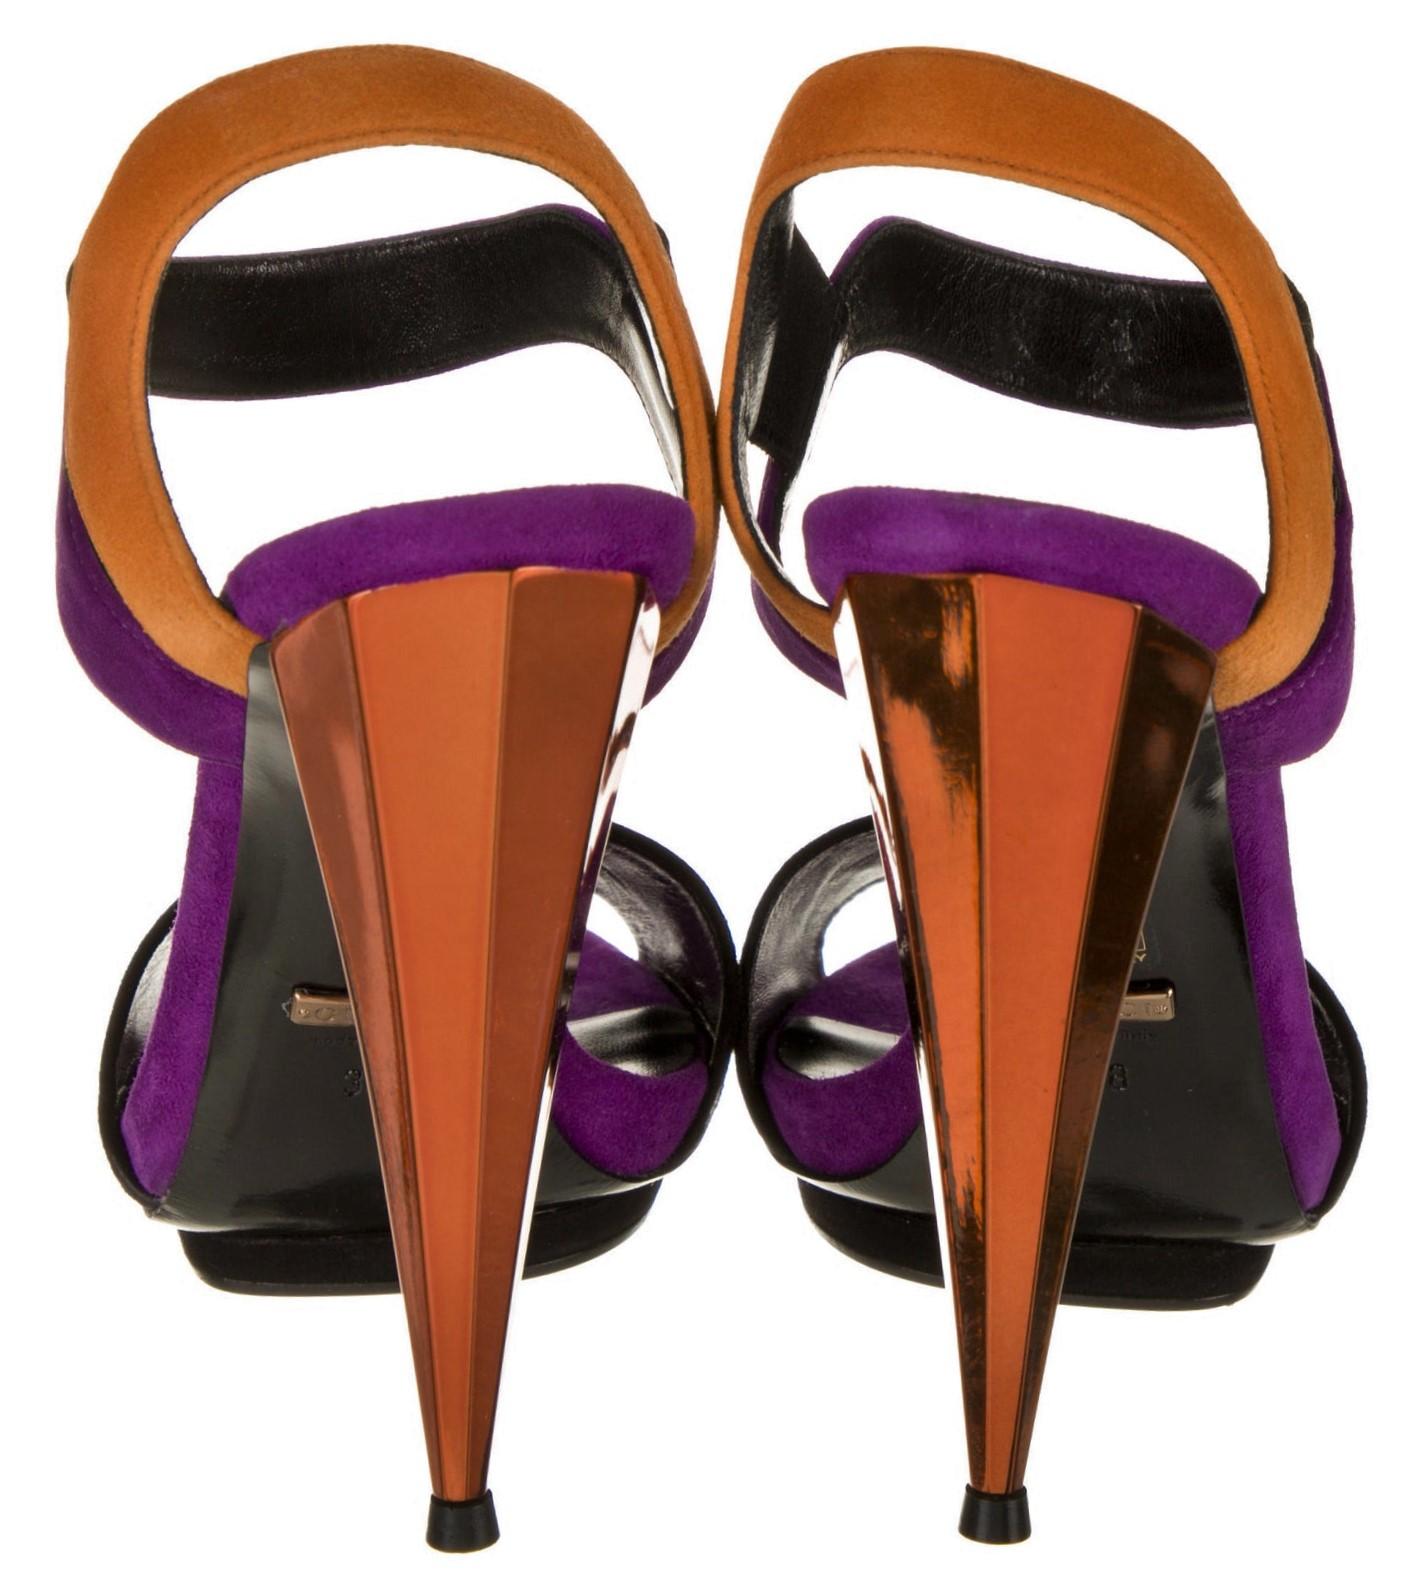 New Gucci Ad Runway 2014 Purple Orange Suede Mirrored Pump Heels Sz 38.5 In New Condition For Sale In Leesburg, VA